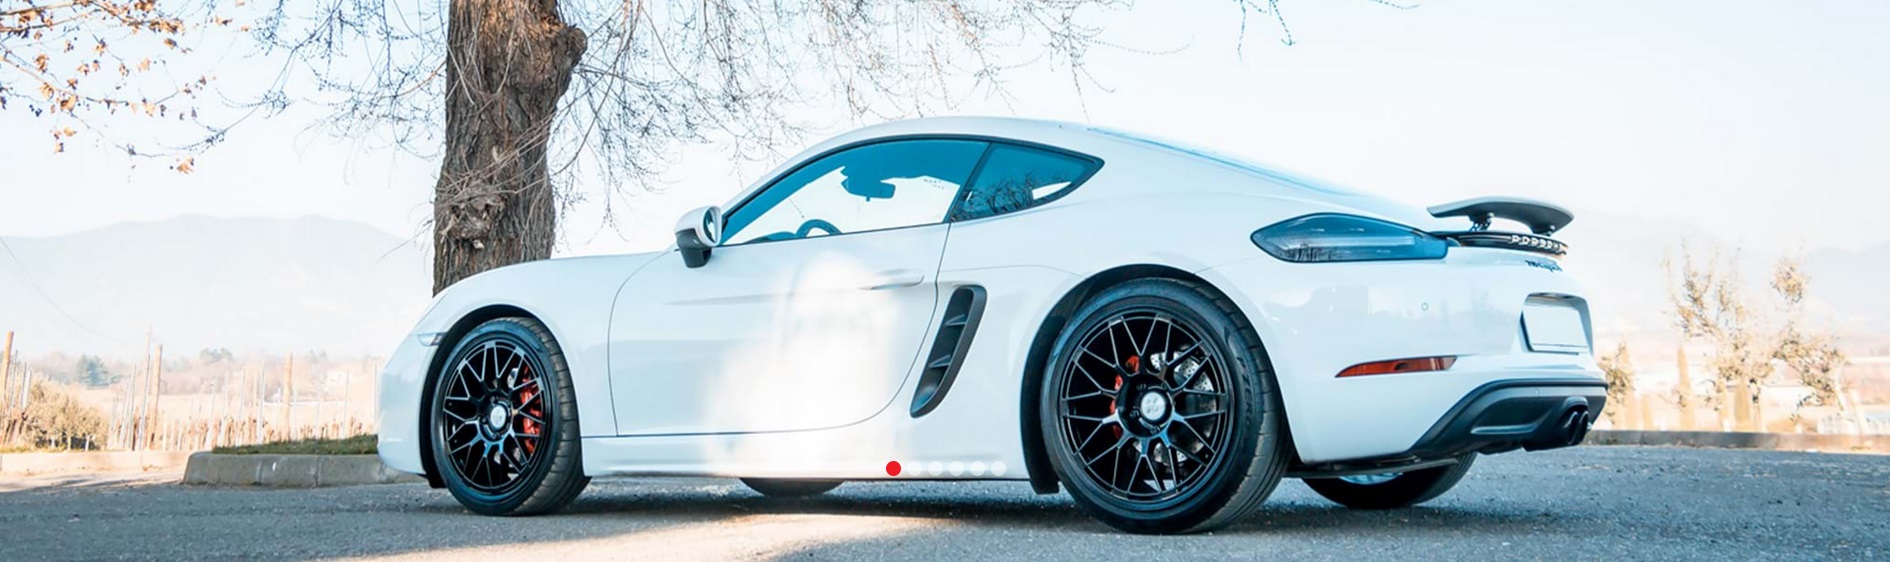 Porsche Fondmetal.jpg